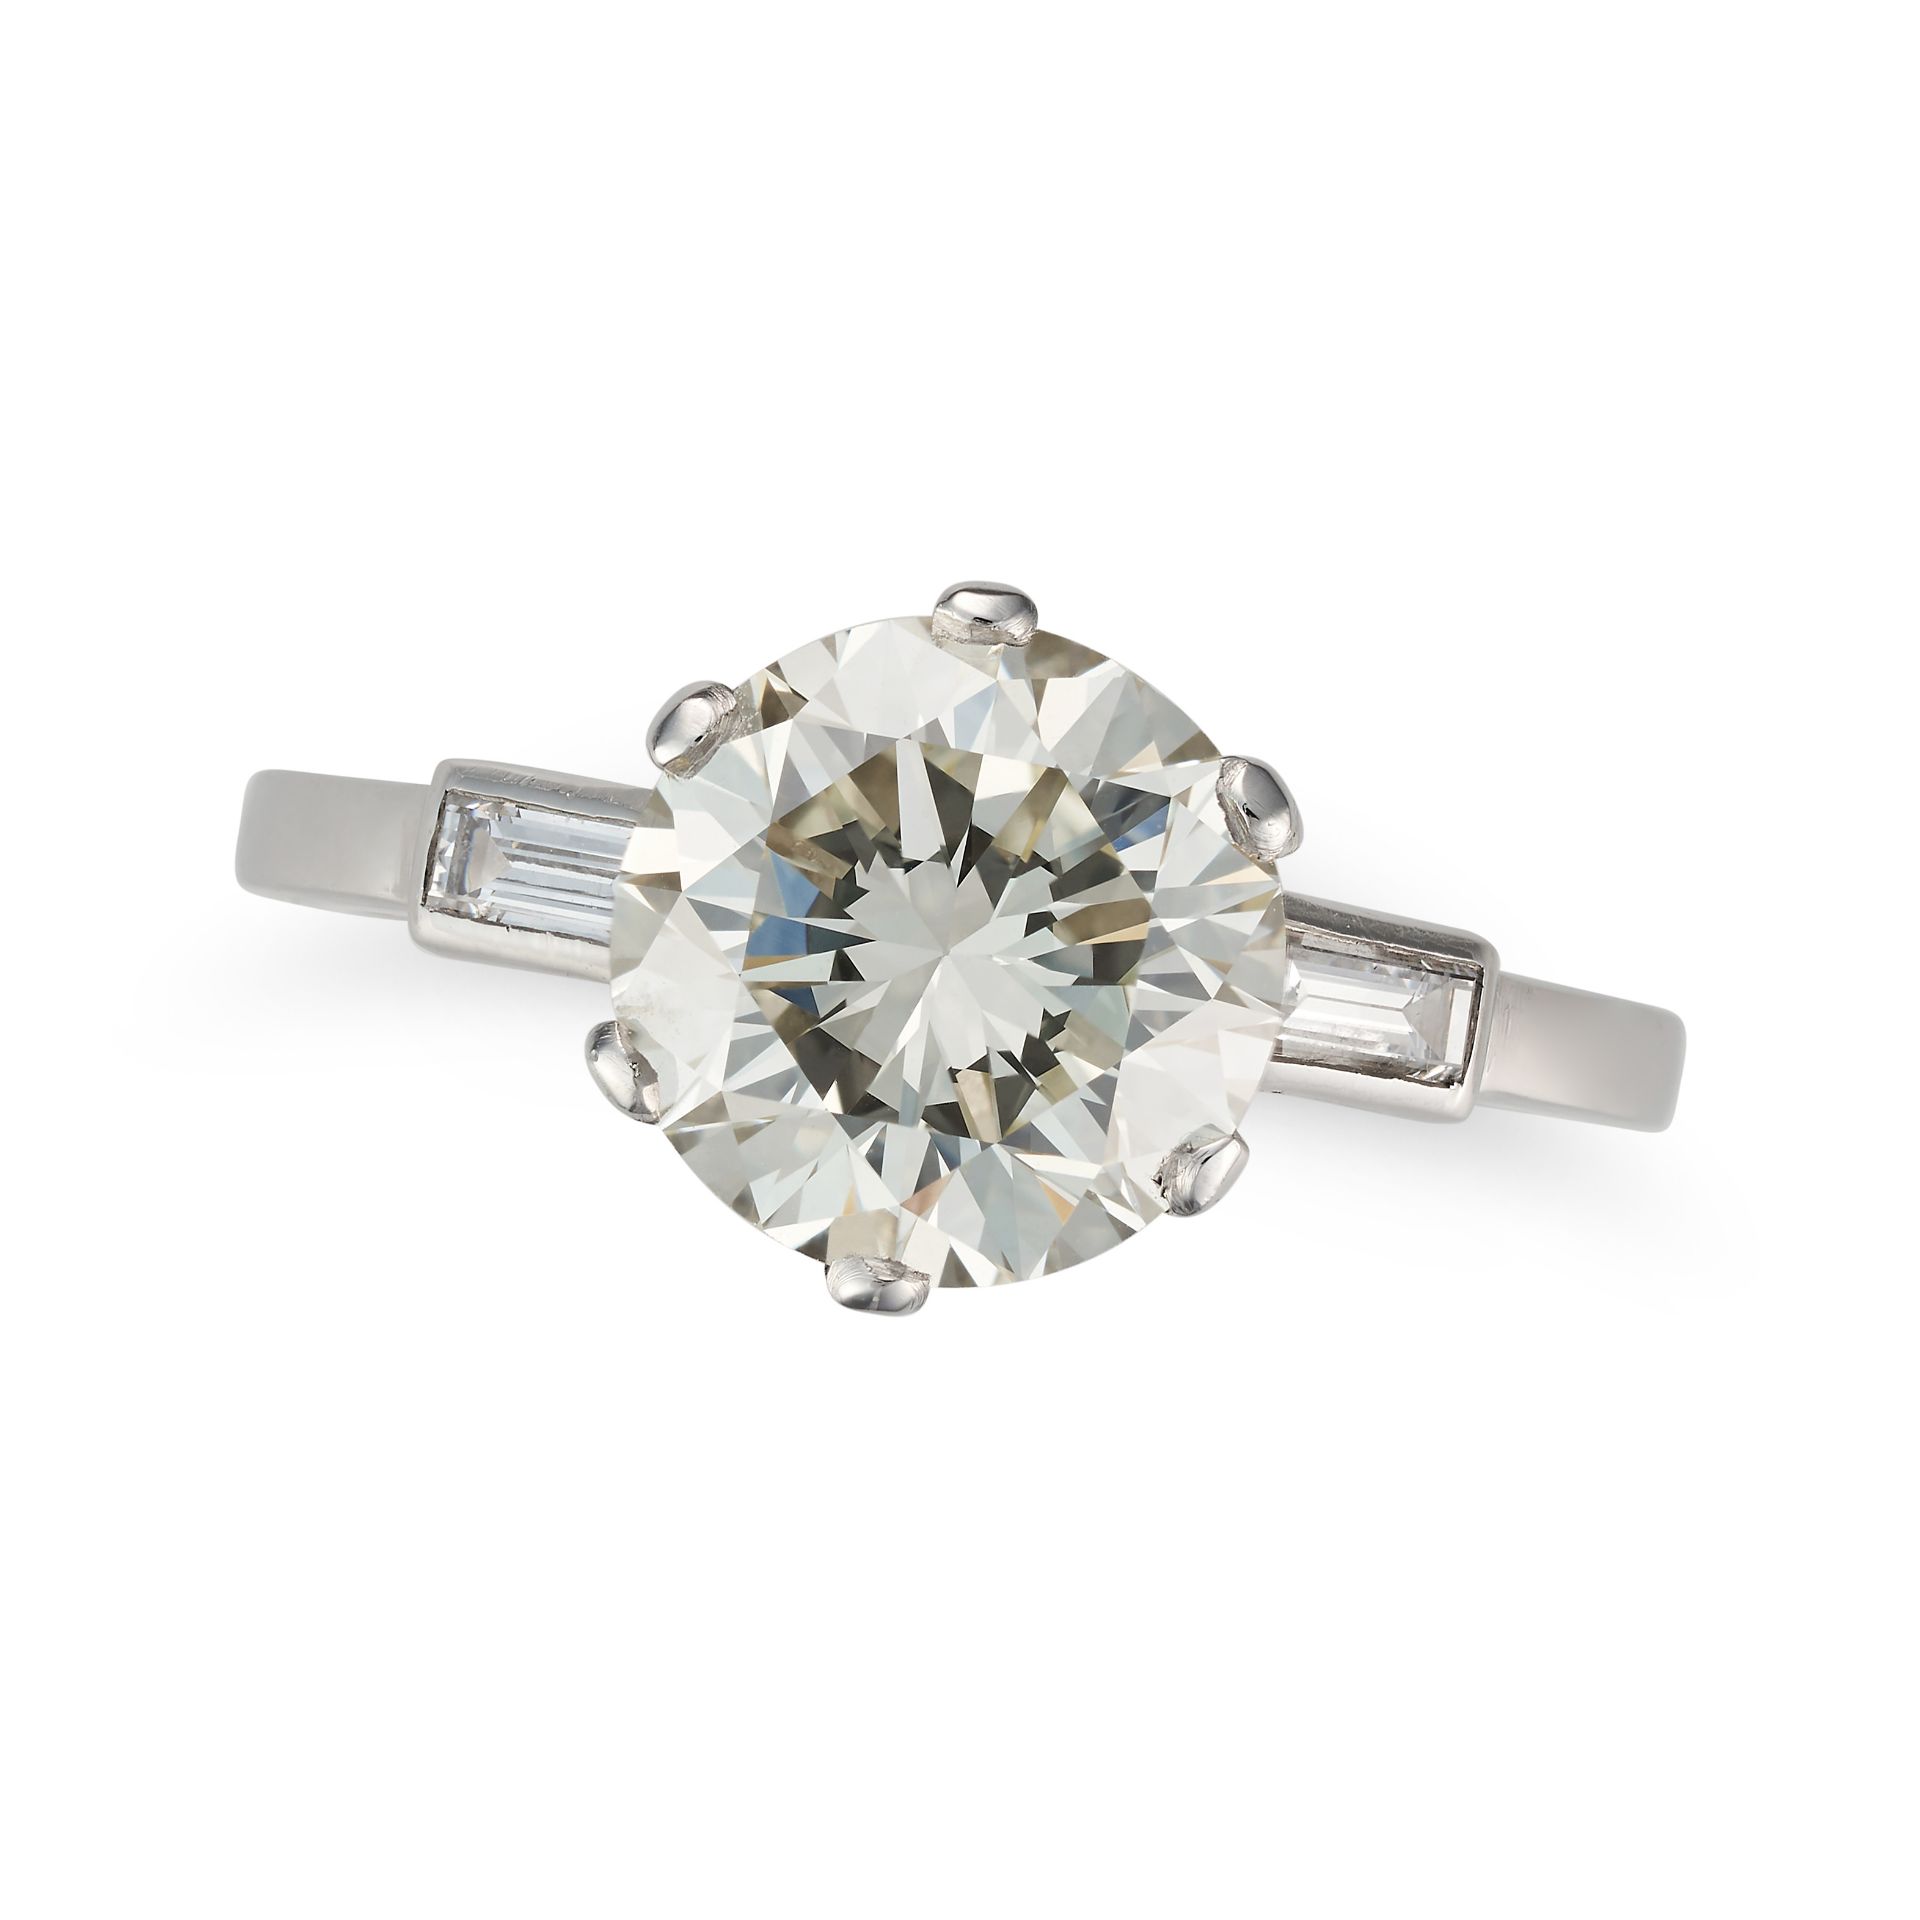 A 3.19 CARAT SOLITAIRE DIAMOND RING in platinum, set with a round brilliant cut diamond of 3.19 c...